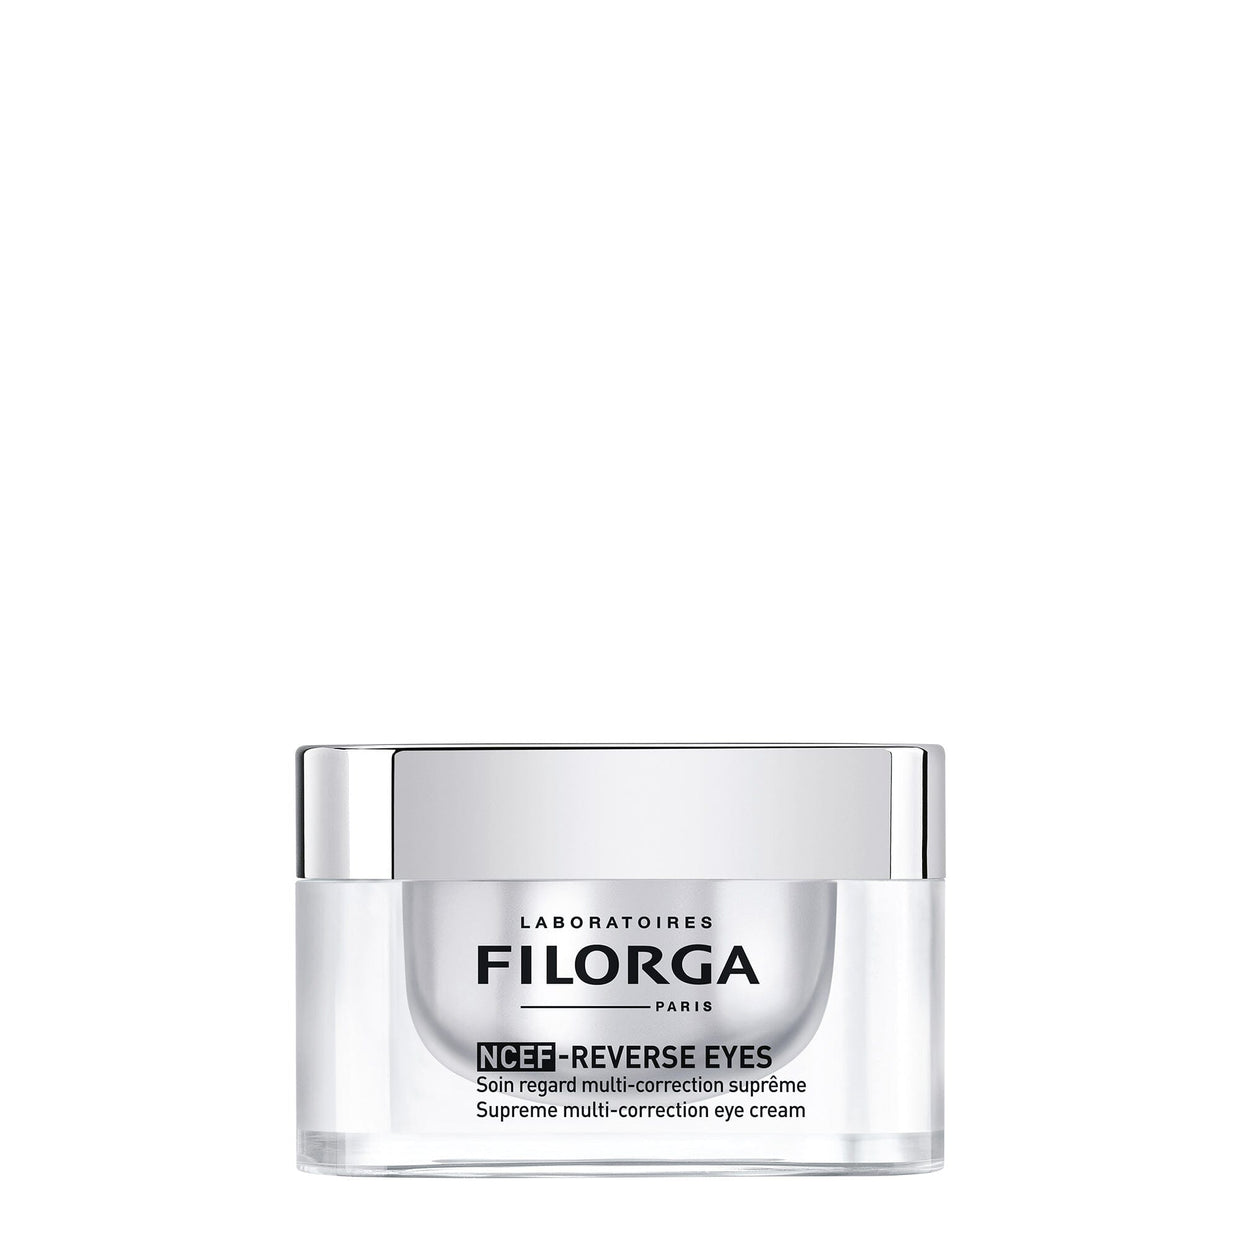 Filorga NCEF-REVERSE EYES Supreme Multi-Correction Eye Cream Filorga 0.5 oz. Shop at Exclusive Beauty Club